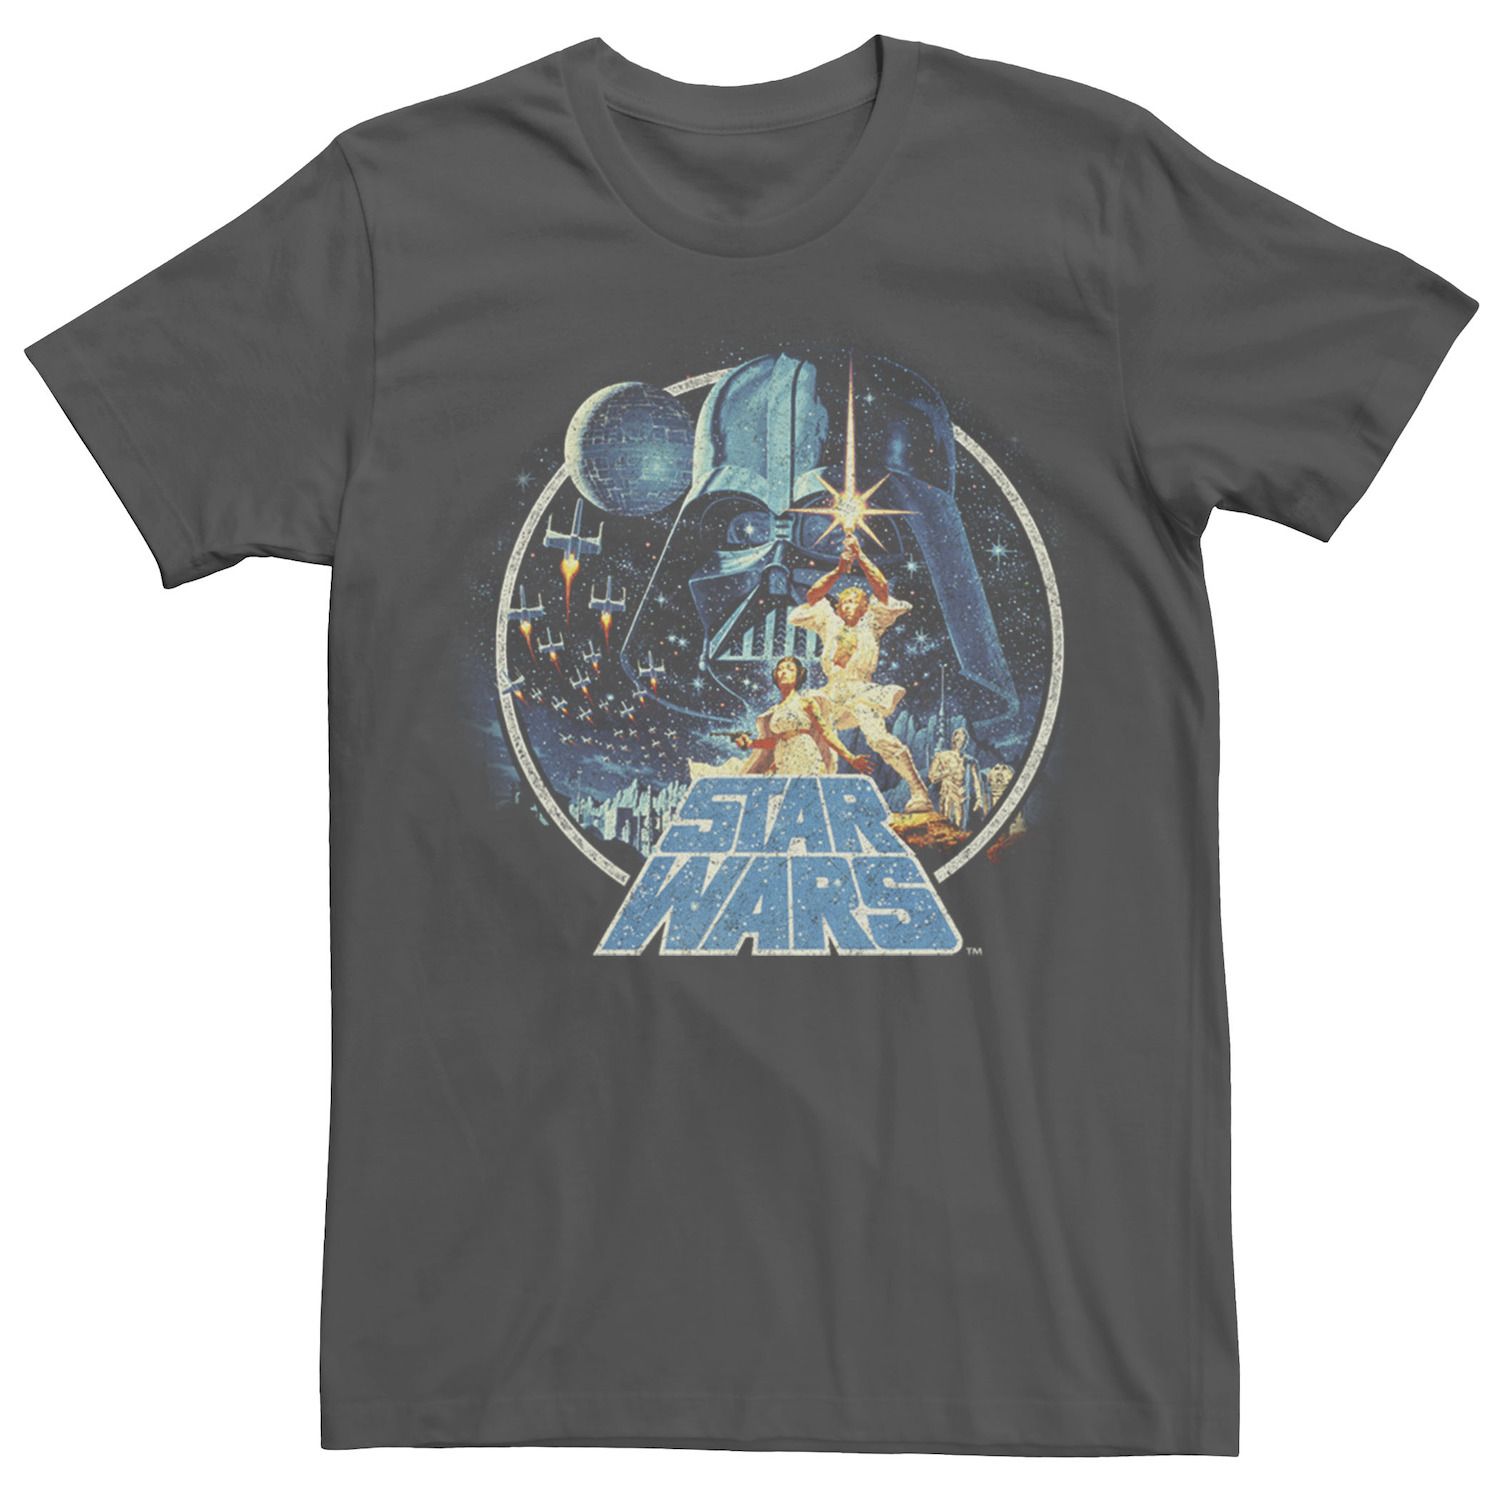 Мужская футболка с графическим плакатом в стиле ретро Star Wars